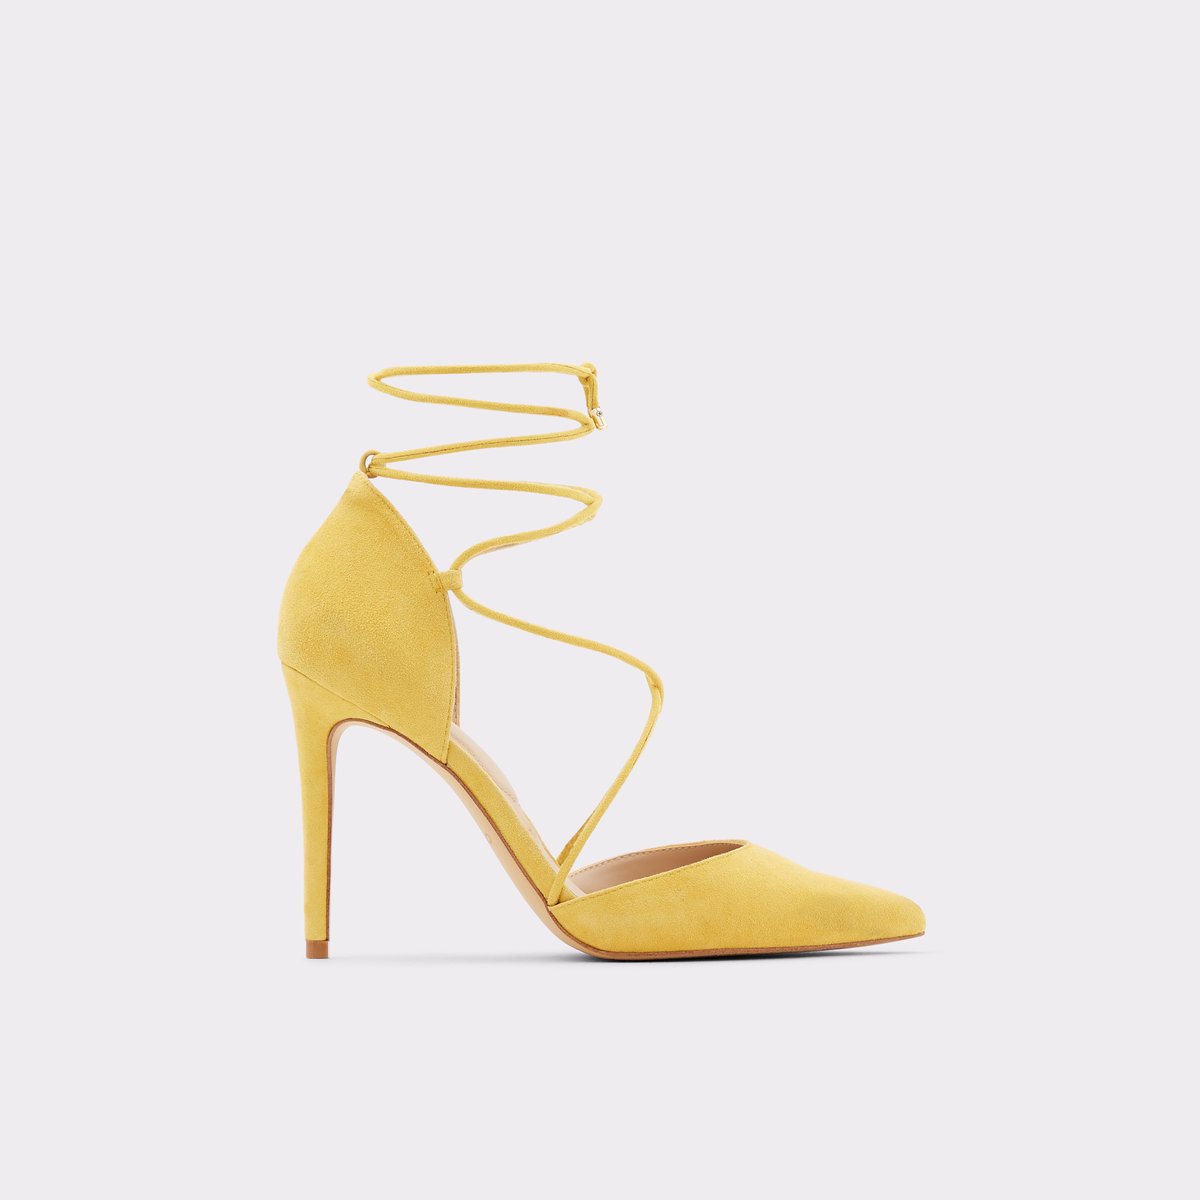 aldo shoes yellow